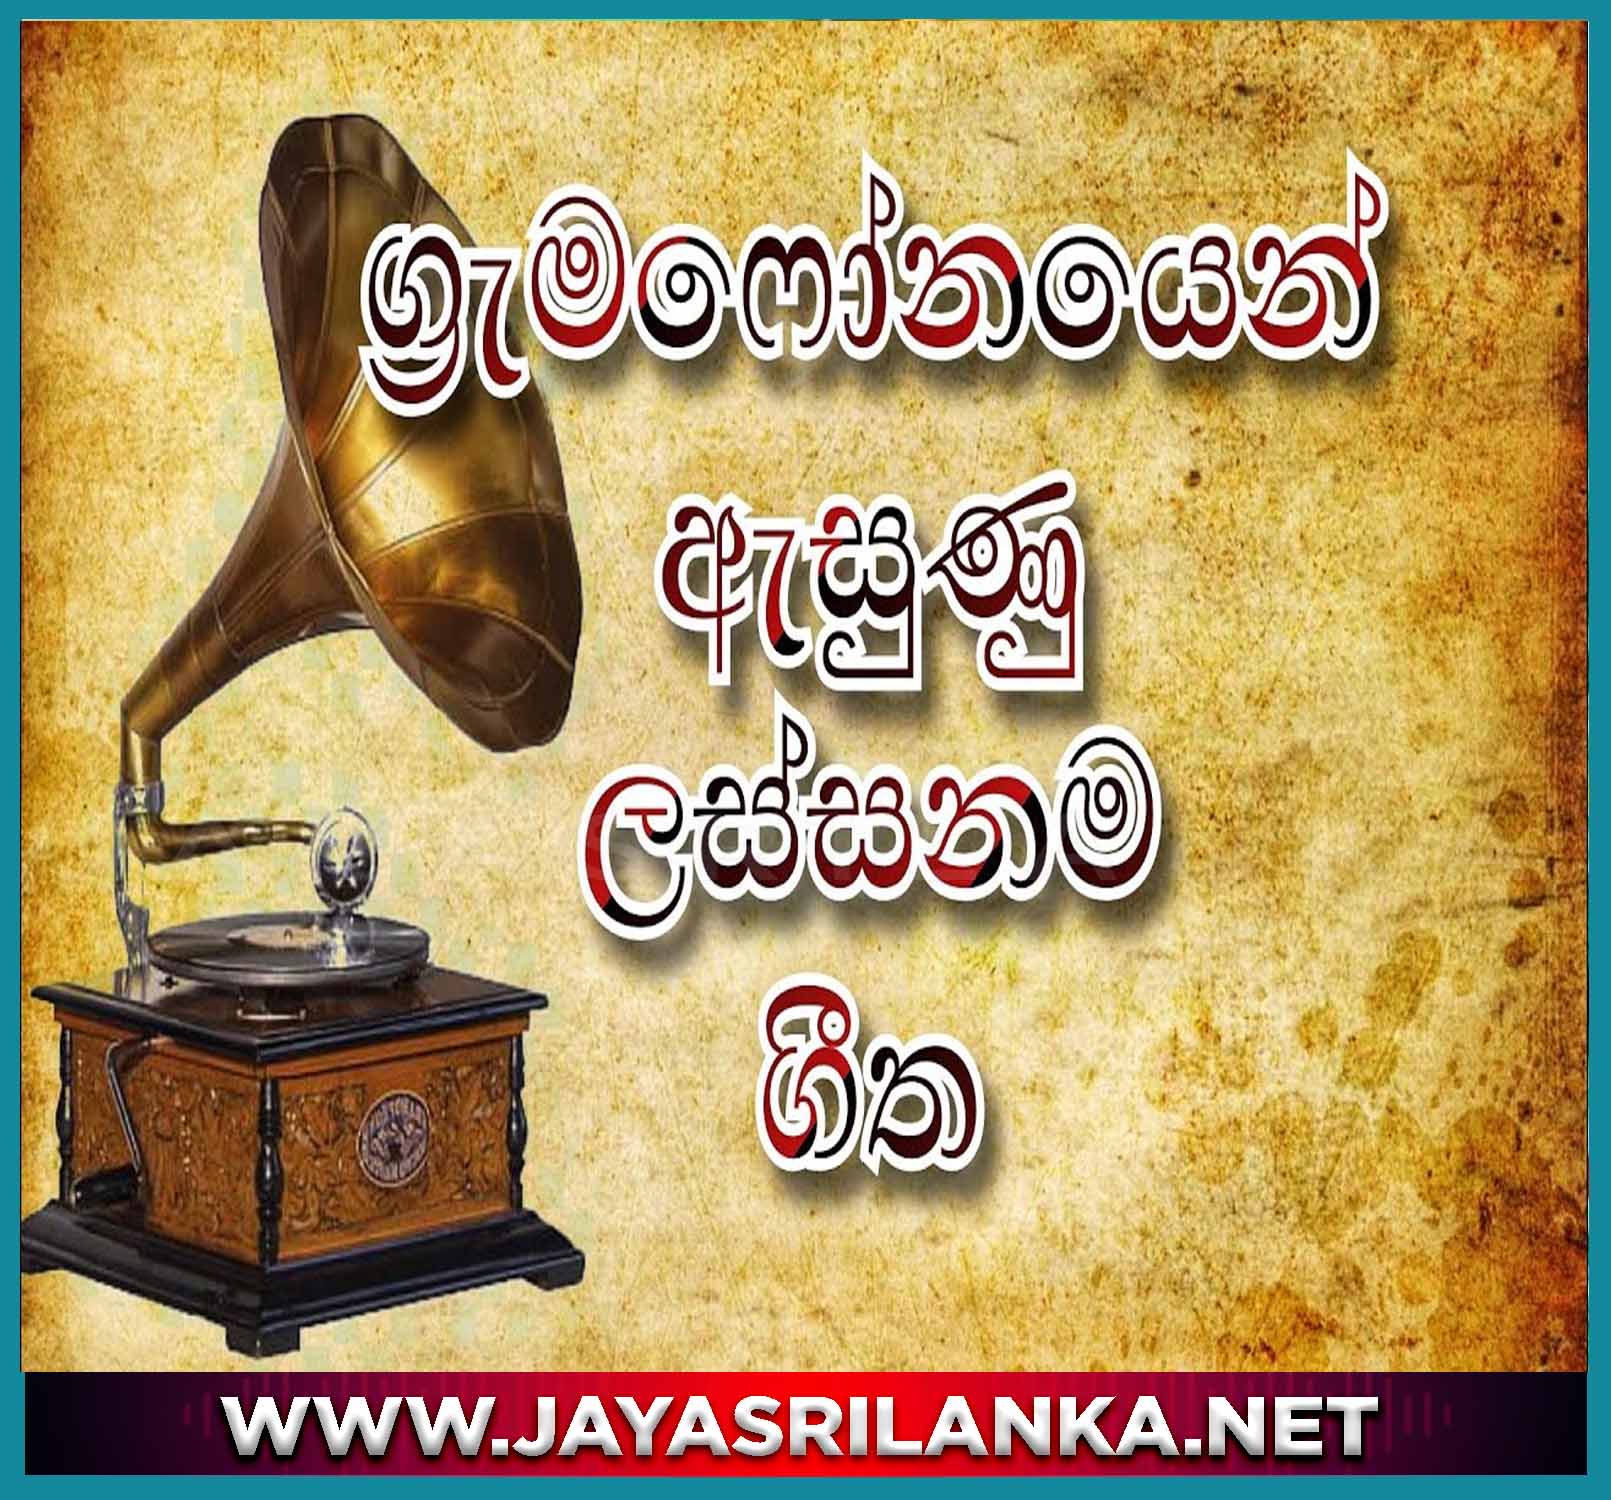 Bandi Preme Tharam - Gramophone Songs mp3 Image